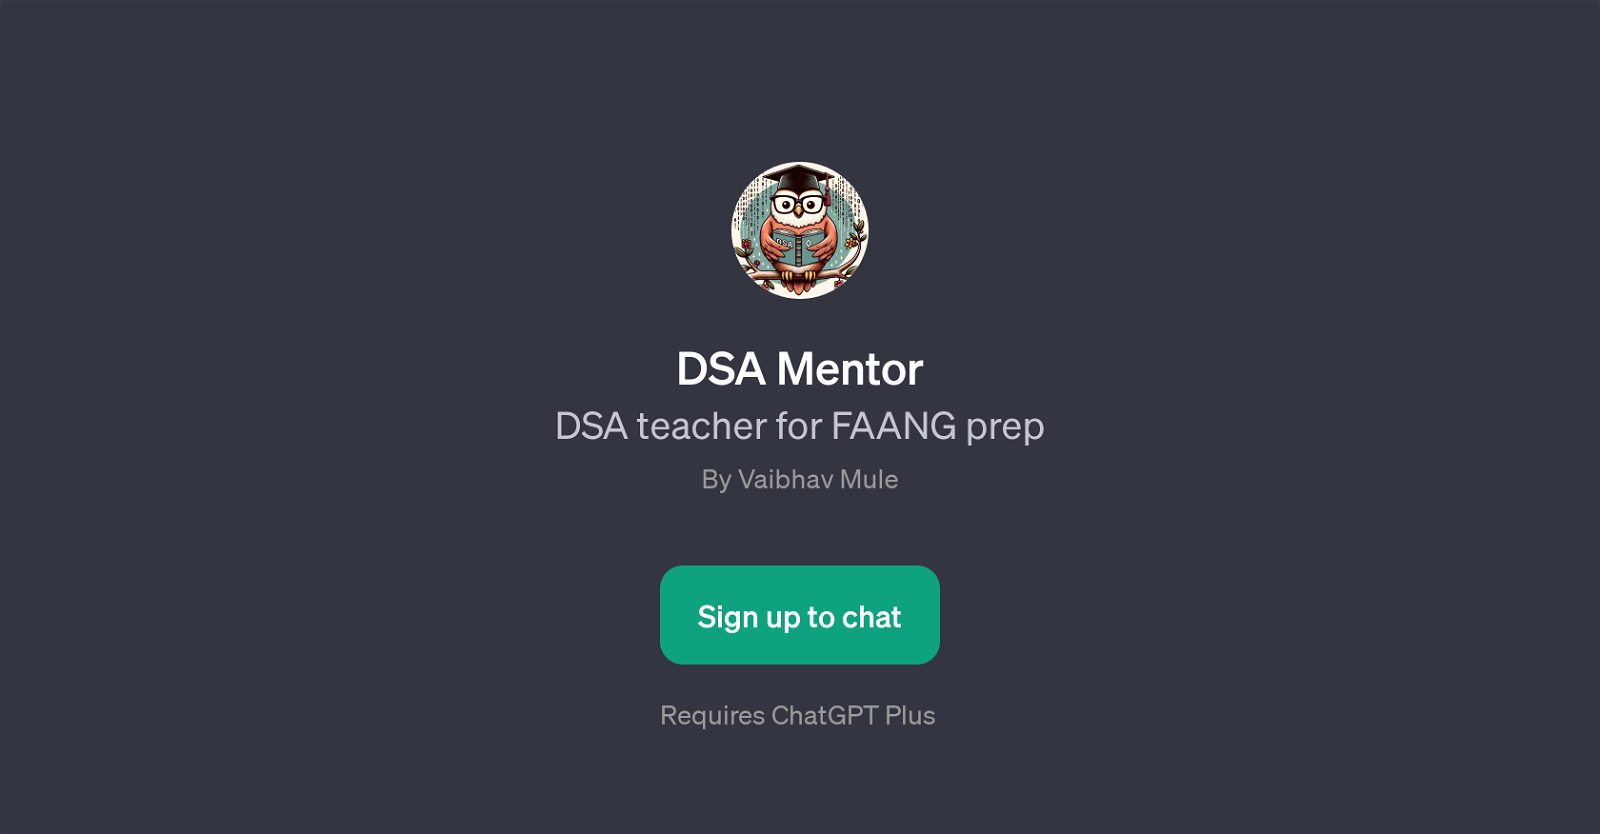 DSA Mentor website